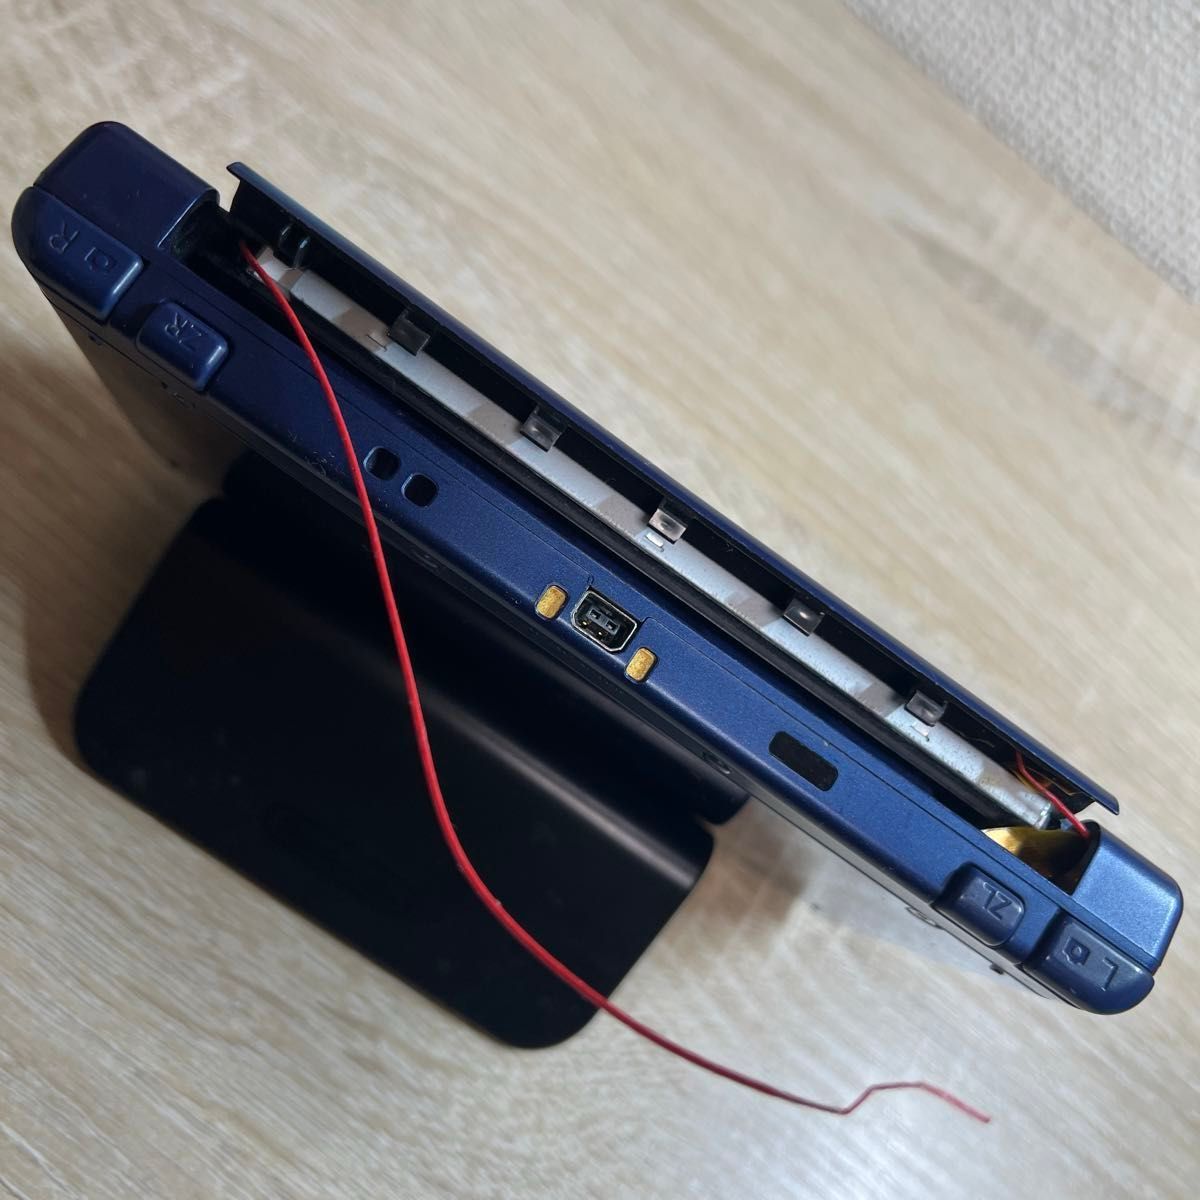 New 3DS LL 本体 RED-001 ジャンク品 破損 ブルー 部品取り